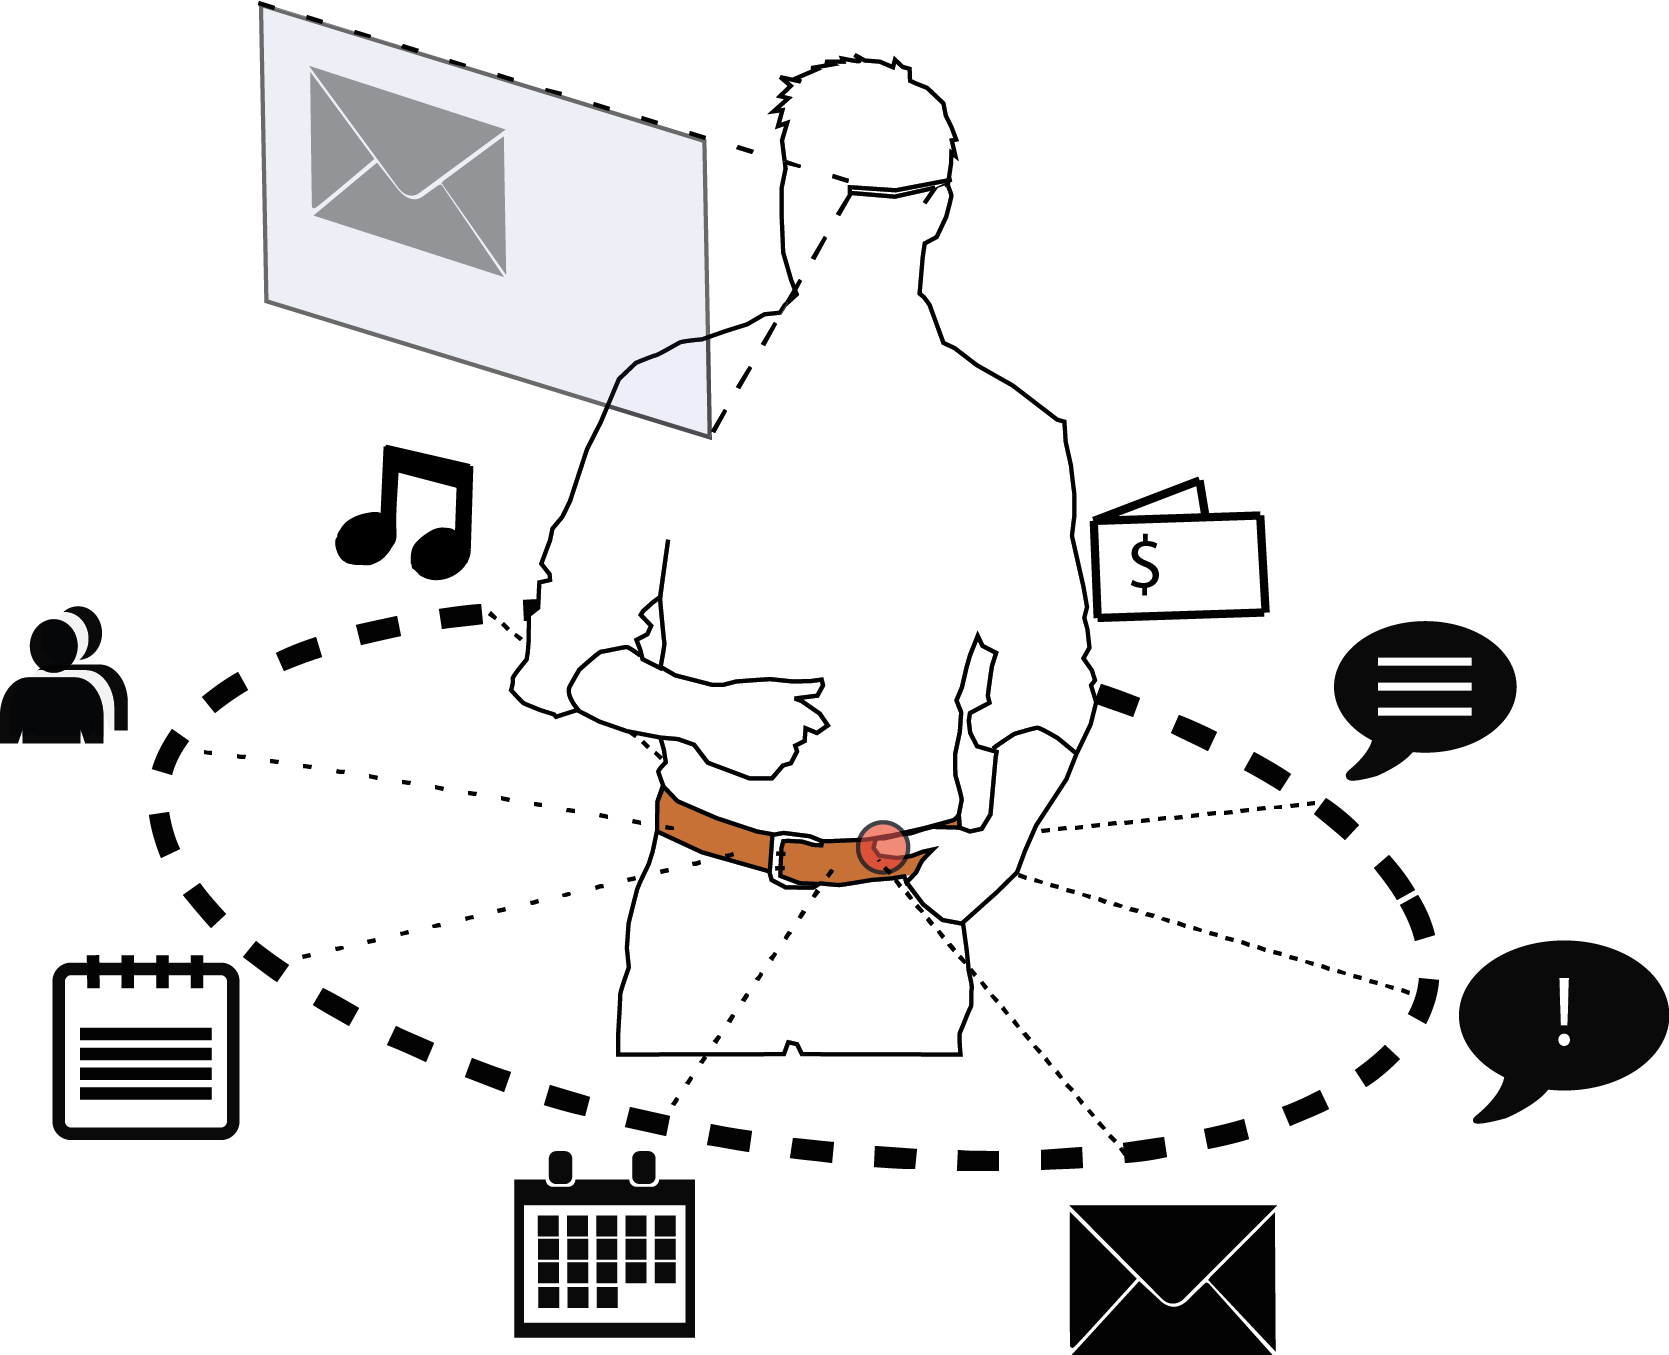 Belt: An Unobtrusive Touch Input Device for Head-worn Displays